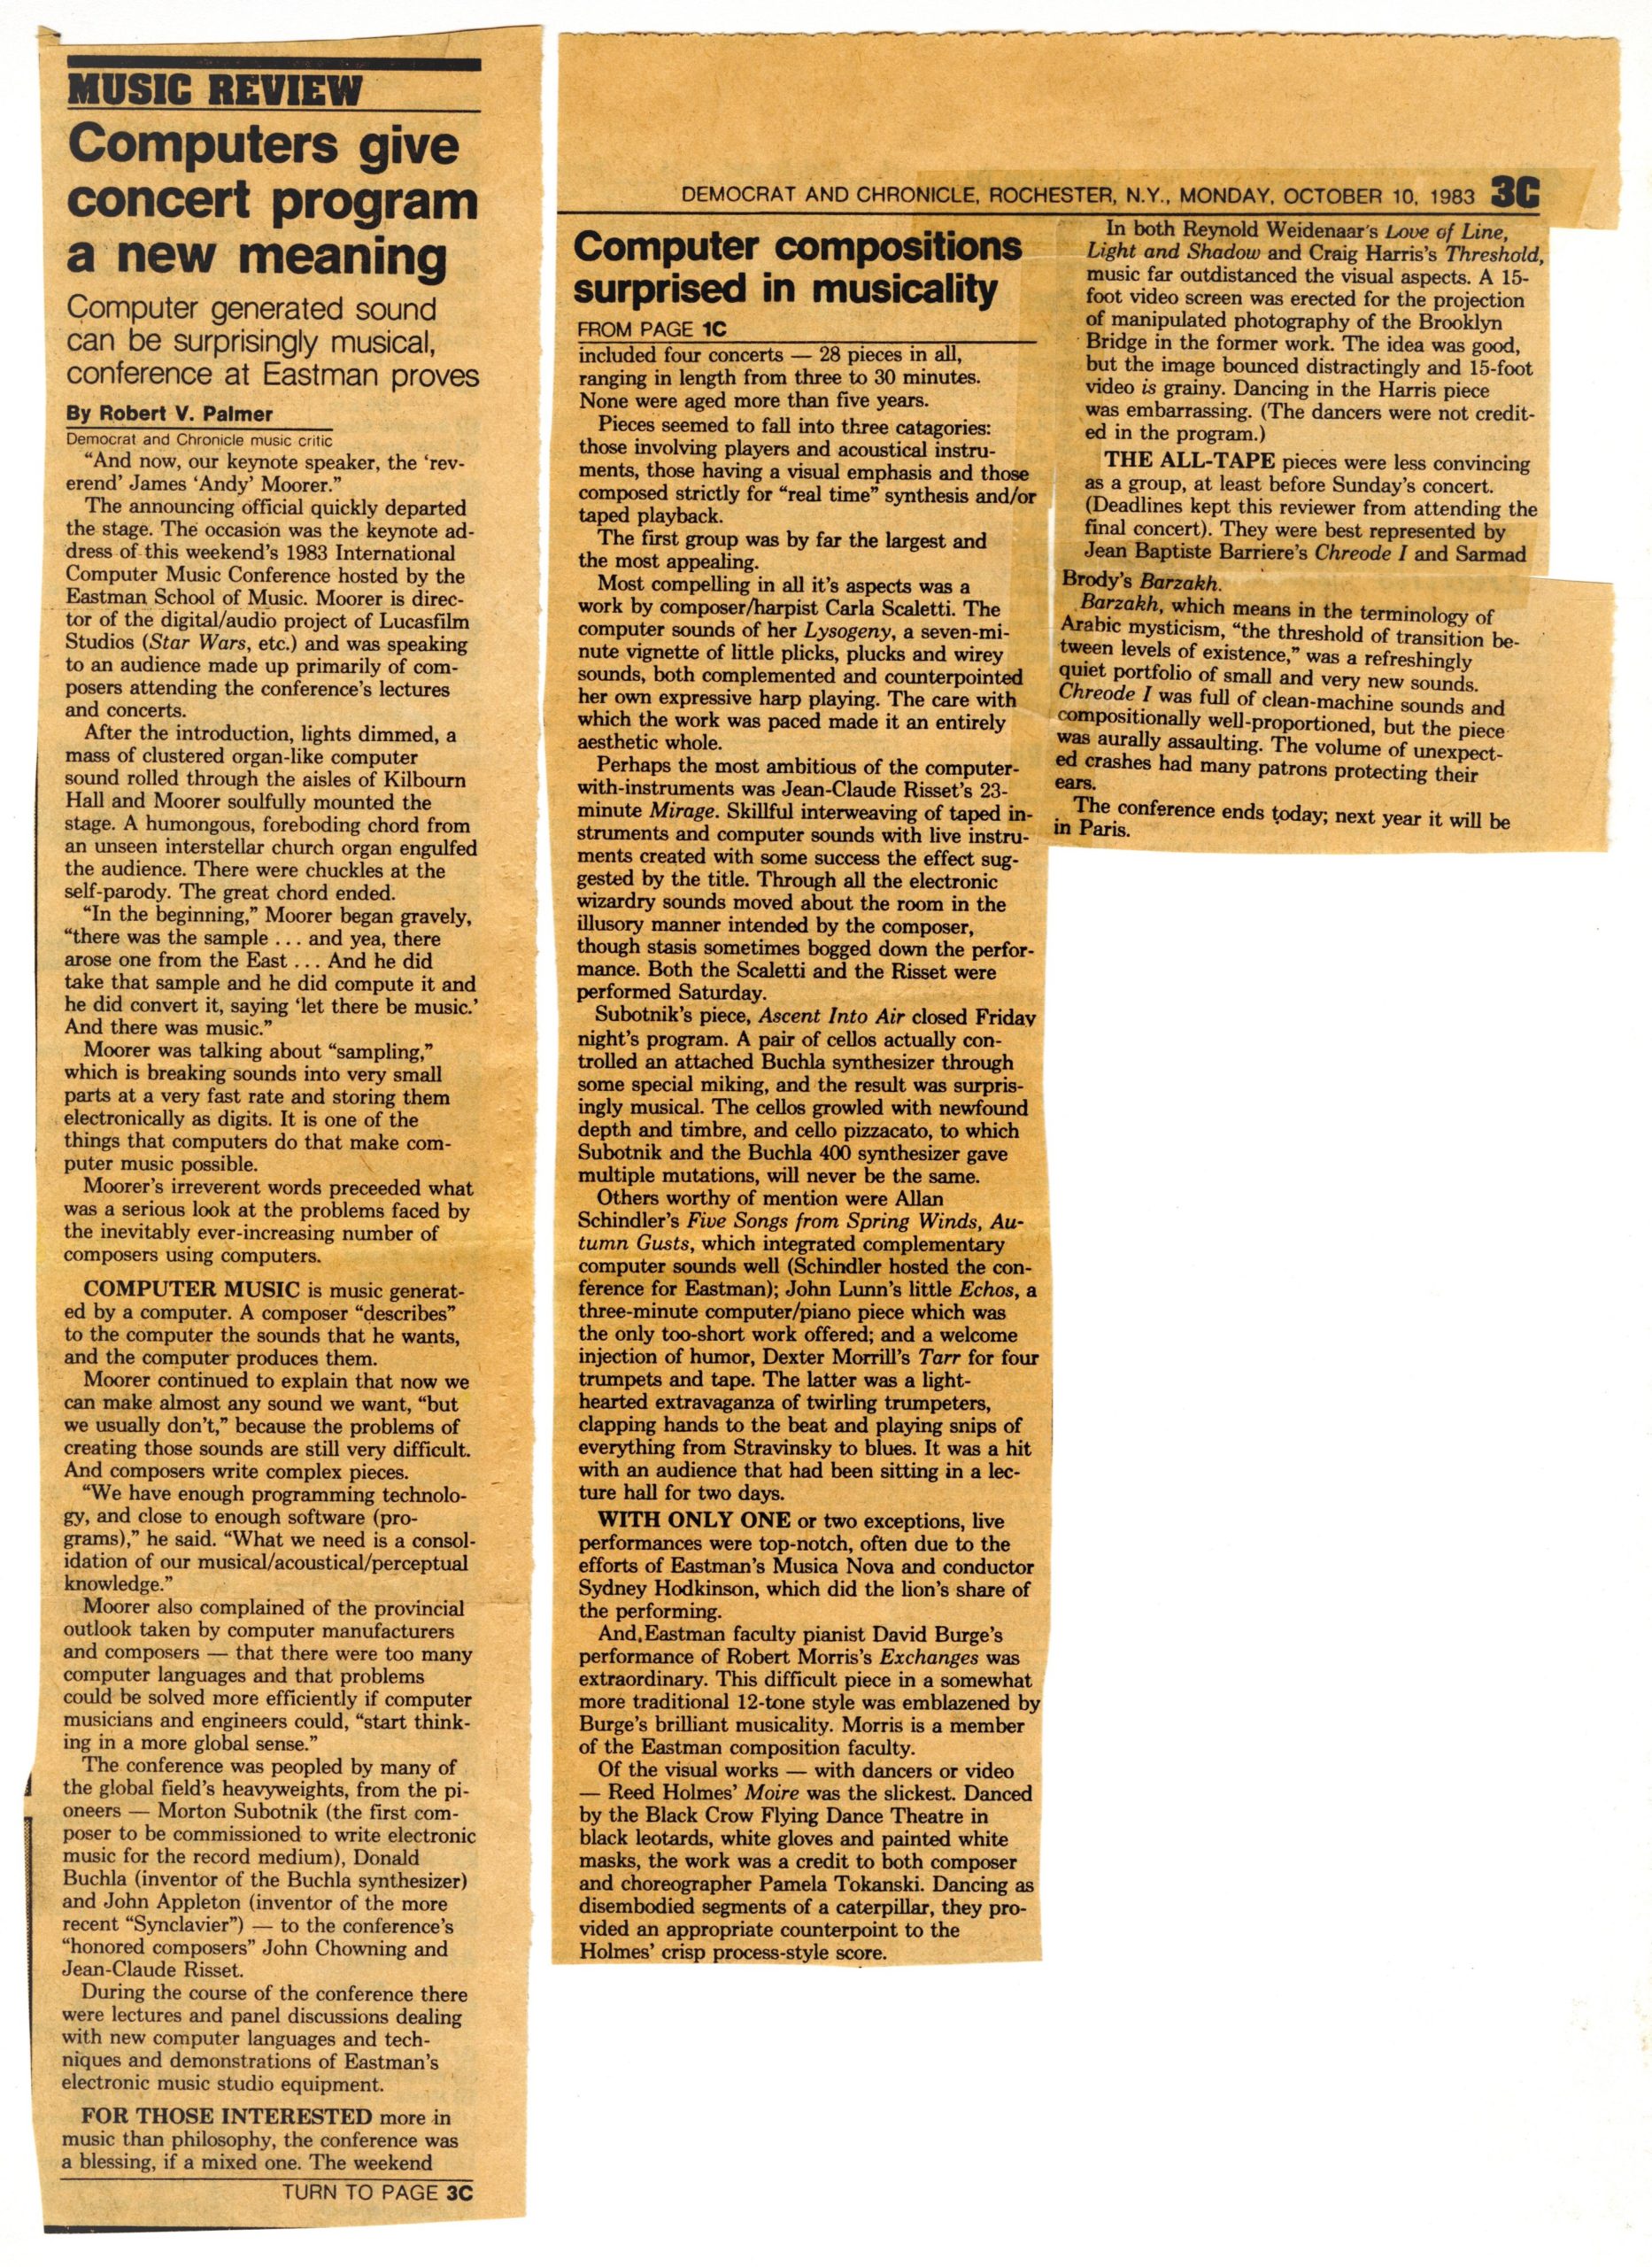 Newspaper article on 1983 ICMC